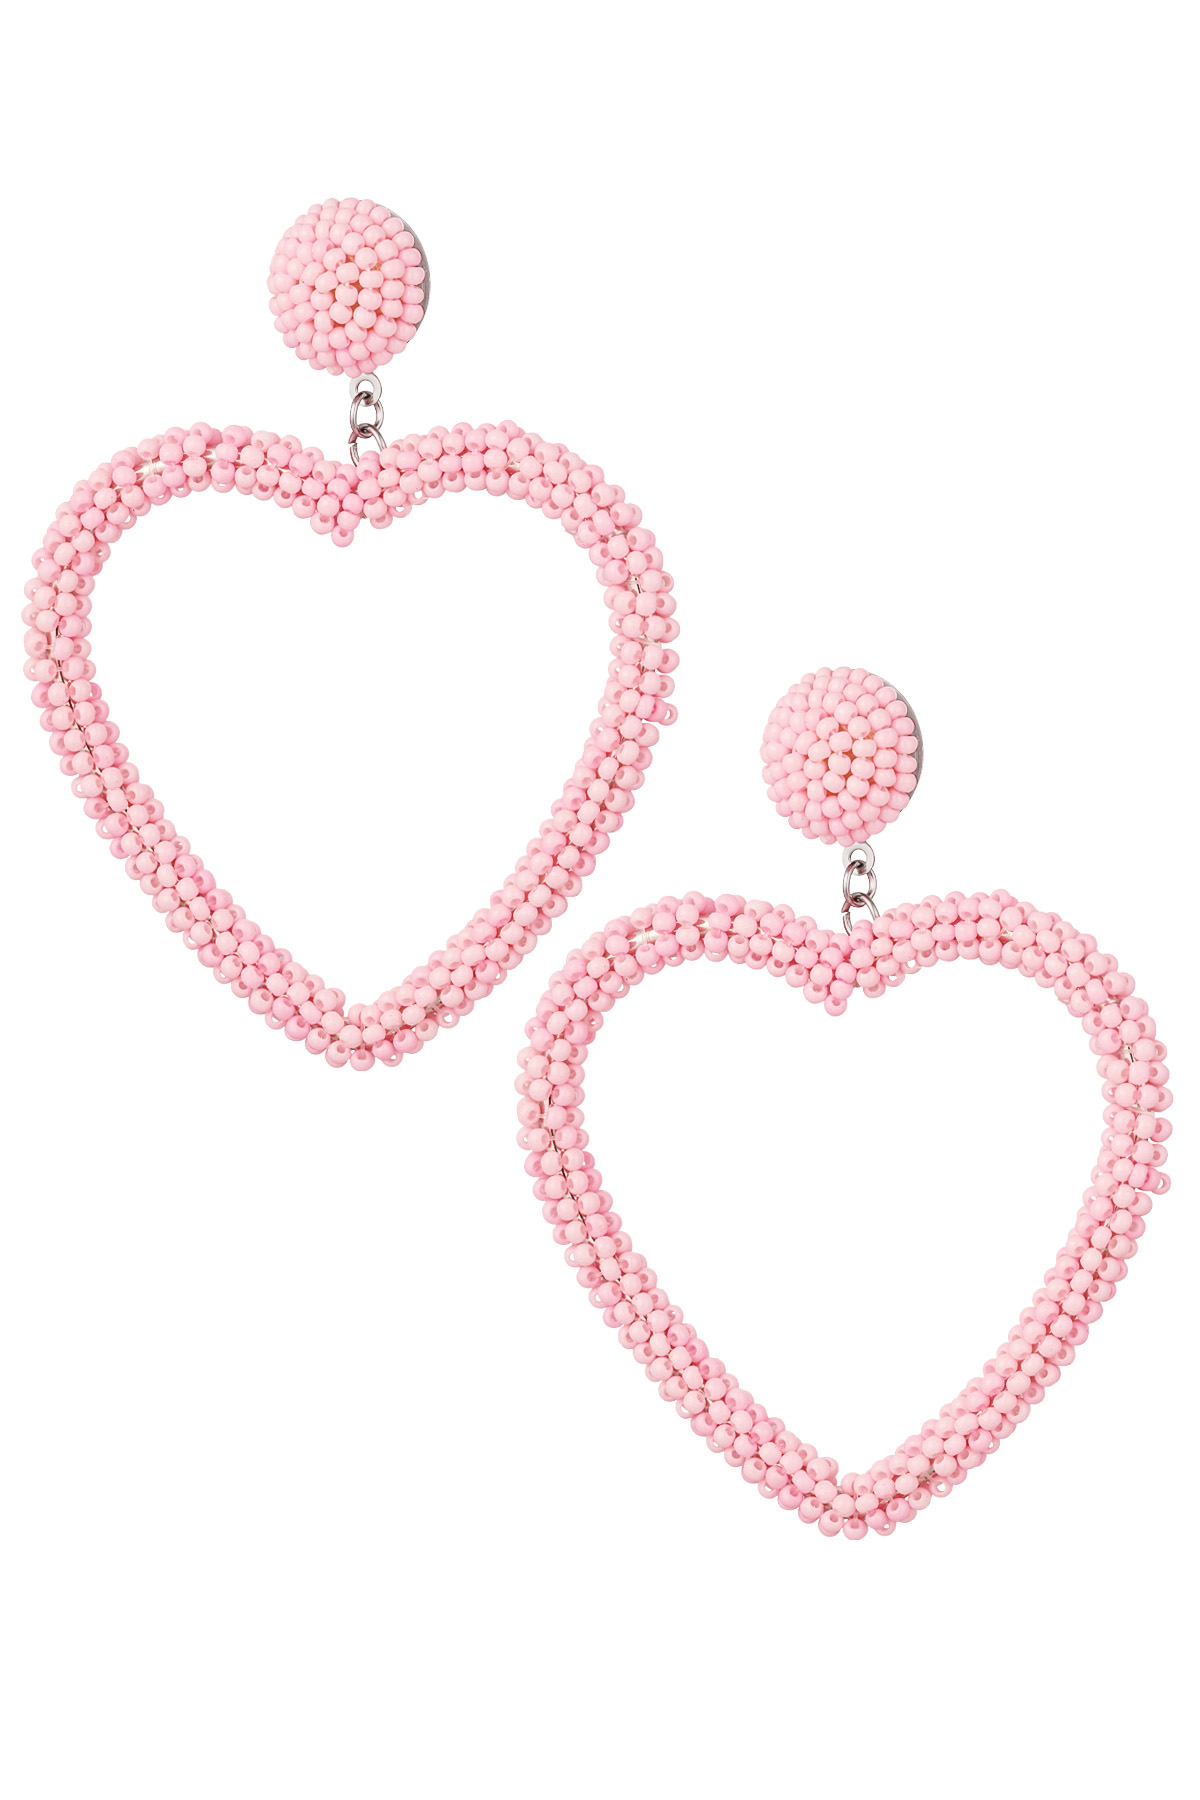 Orecchini perline caramelle - rosa pastello Acciaio inossidabile 